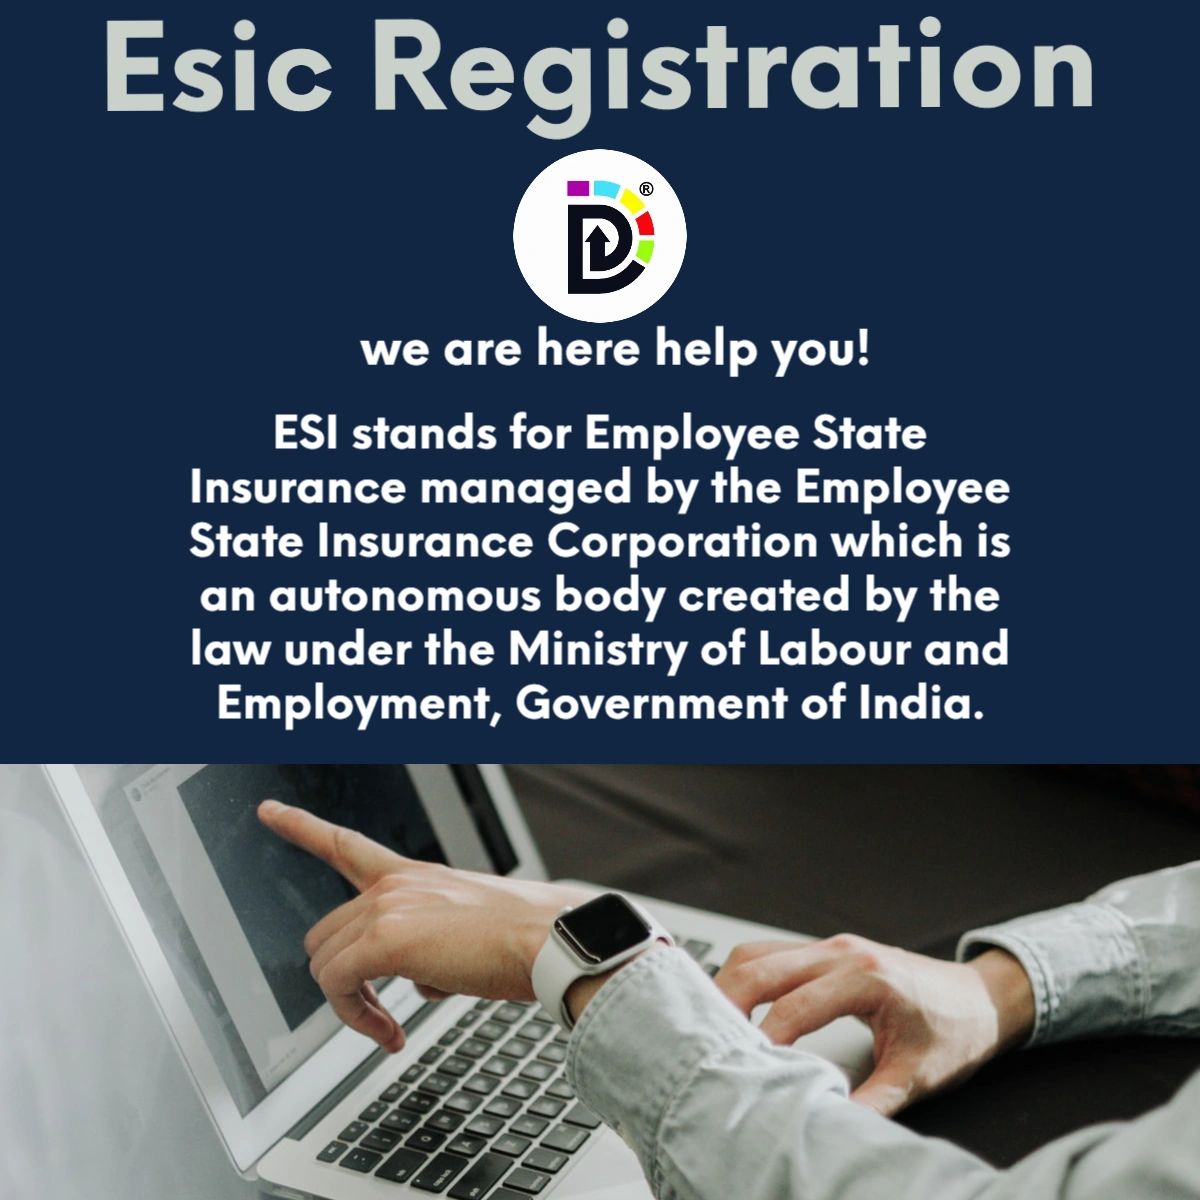 Esic Registration